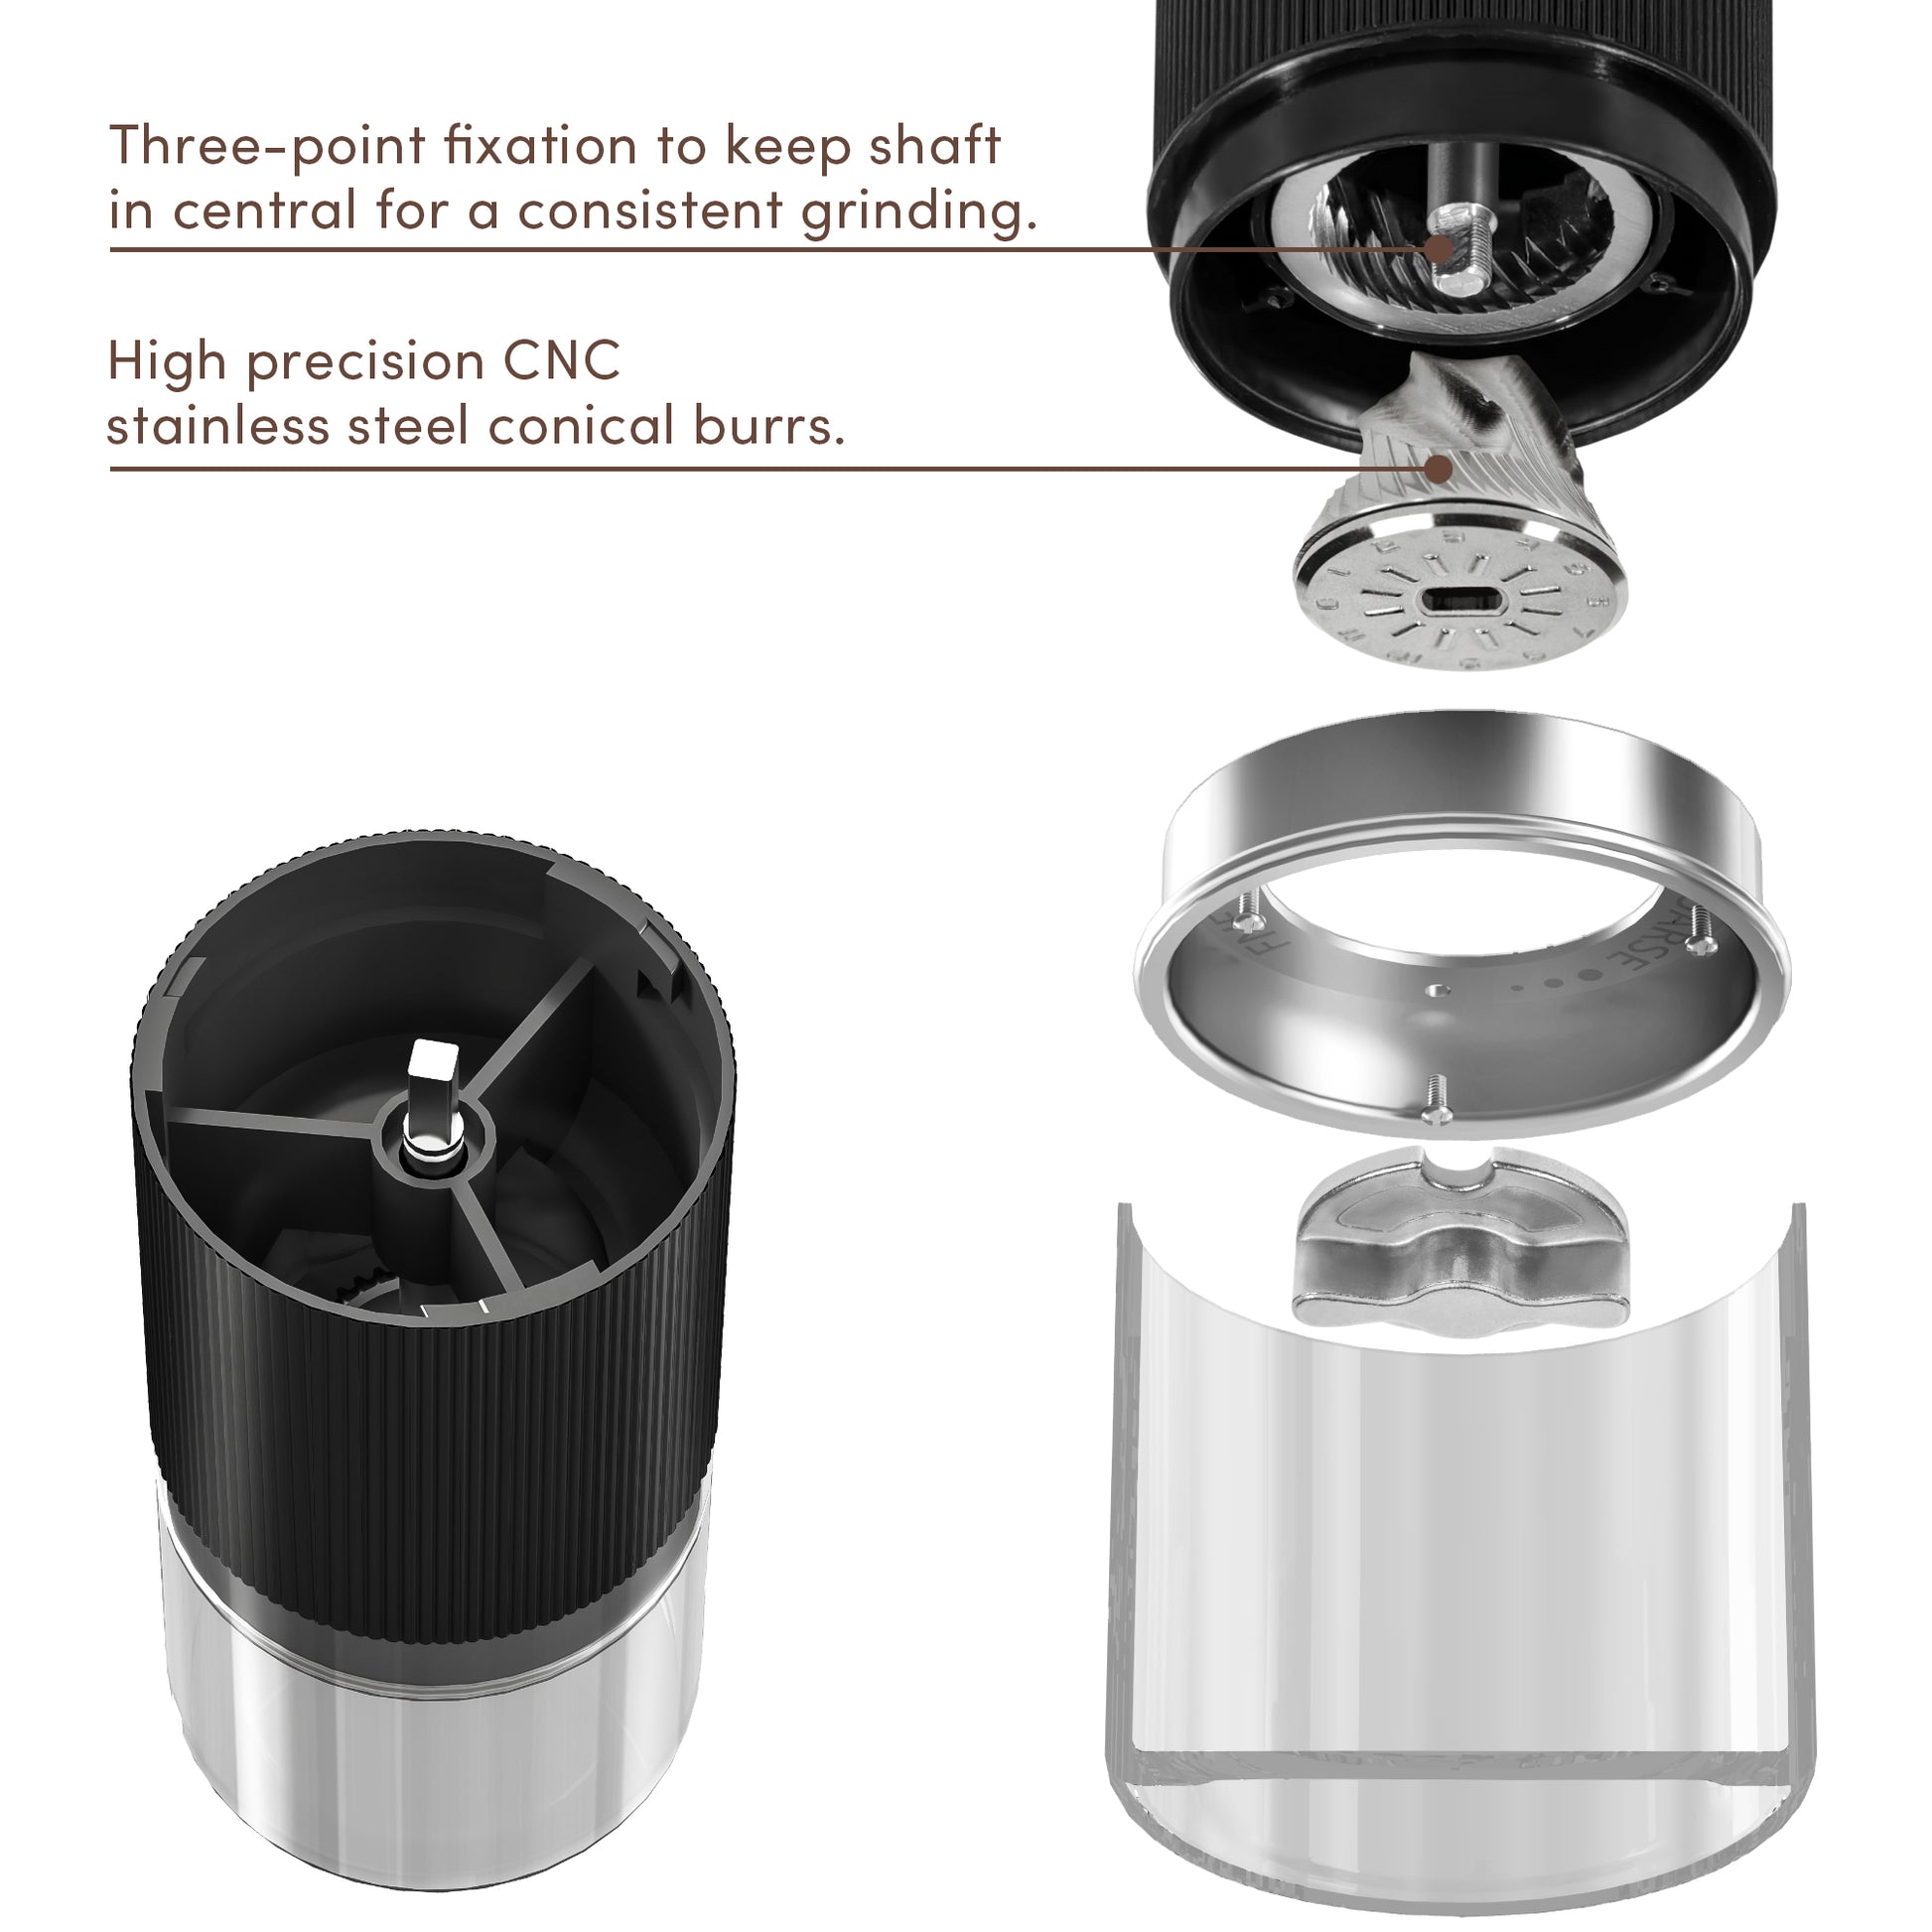 <img src="coffee grinder.jpg" alt="wirsh poratable coffee grinder conica burr set"/>